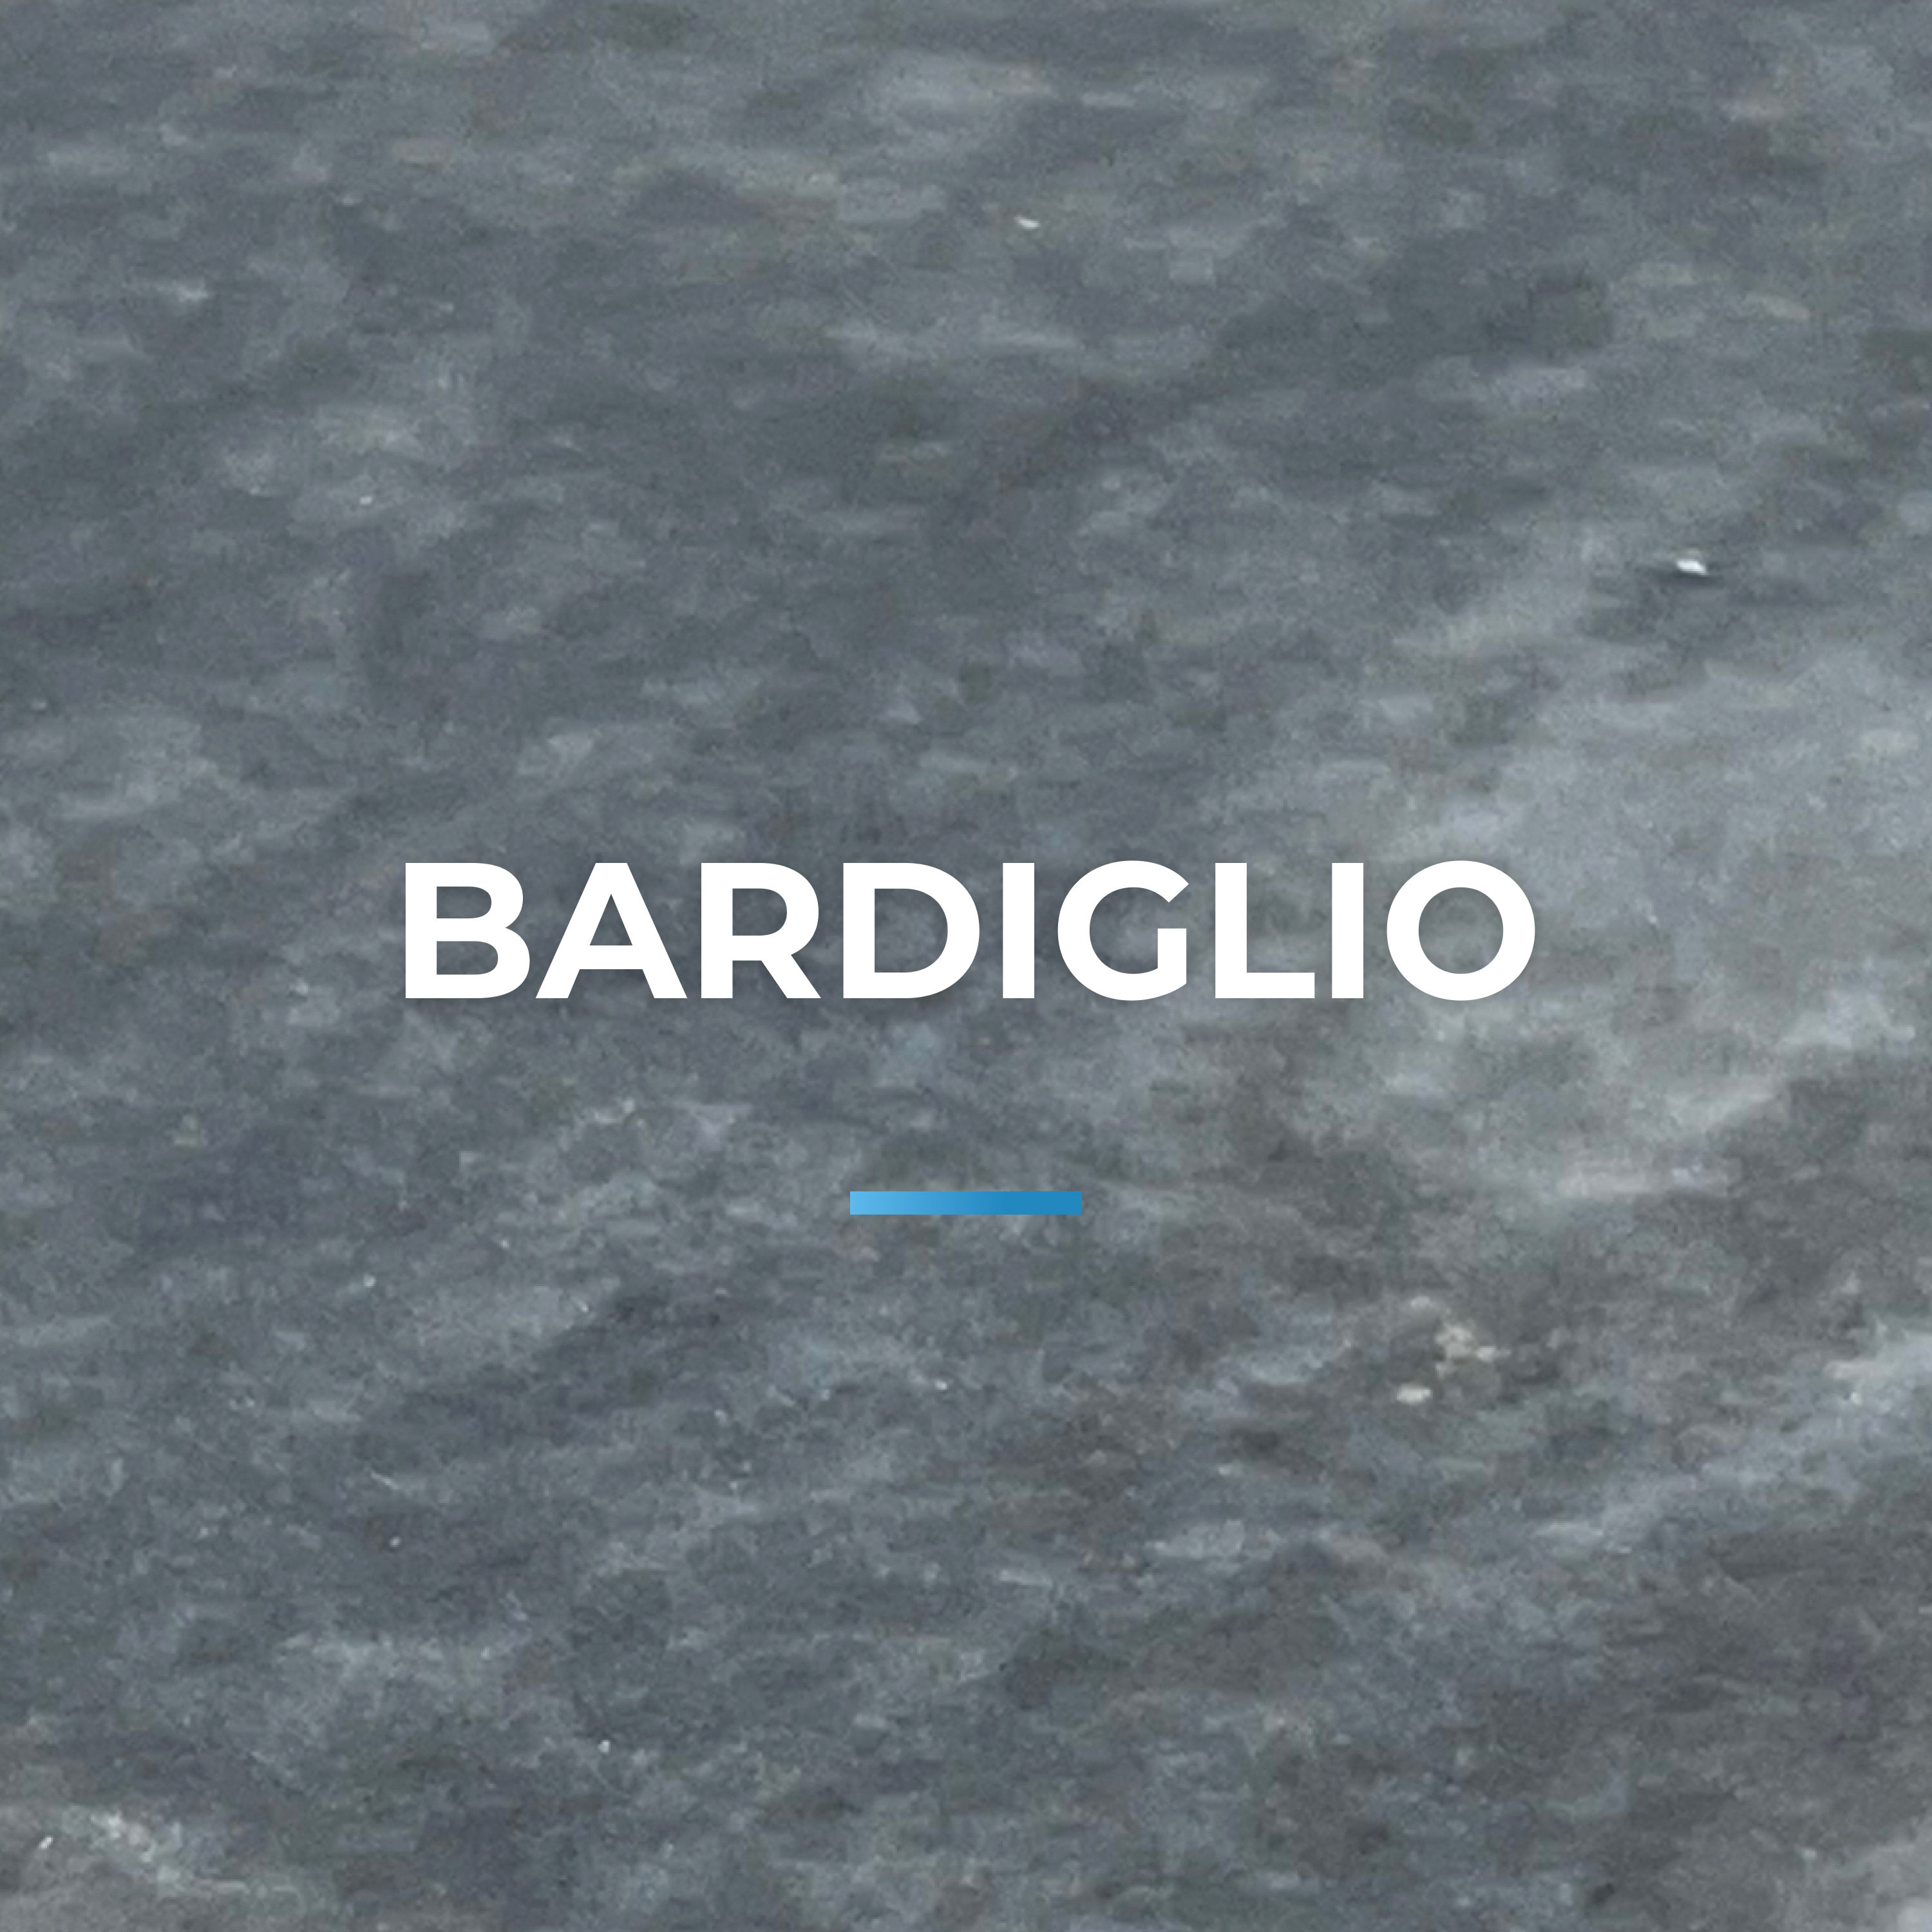 Bardiglio collection